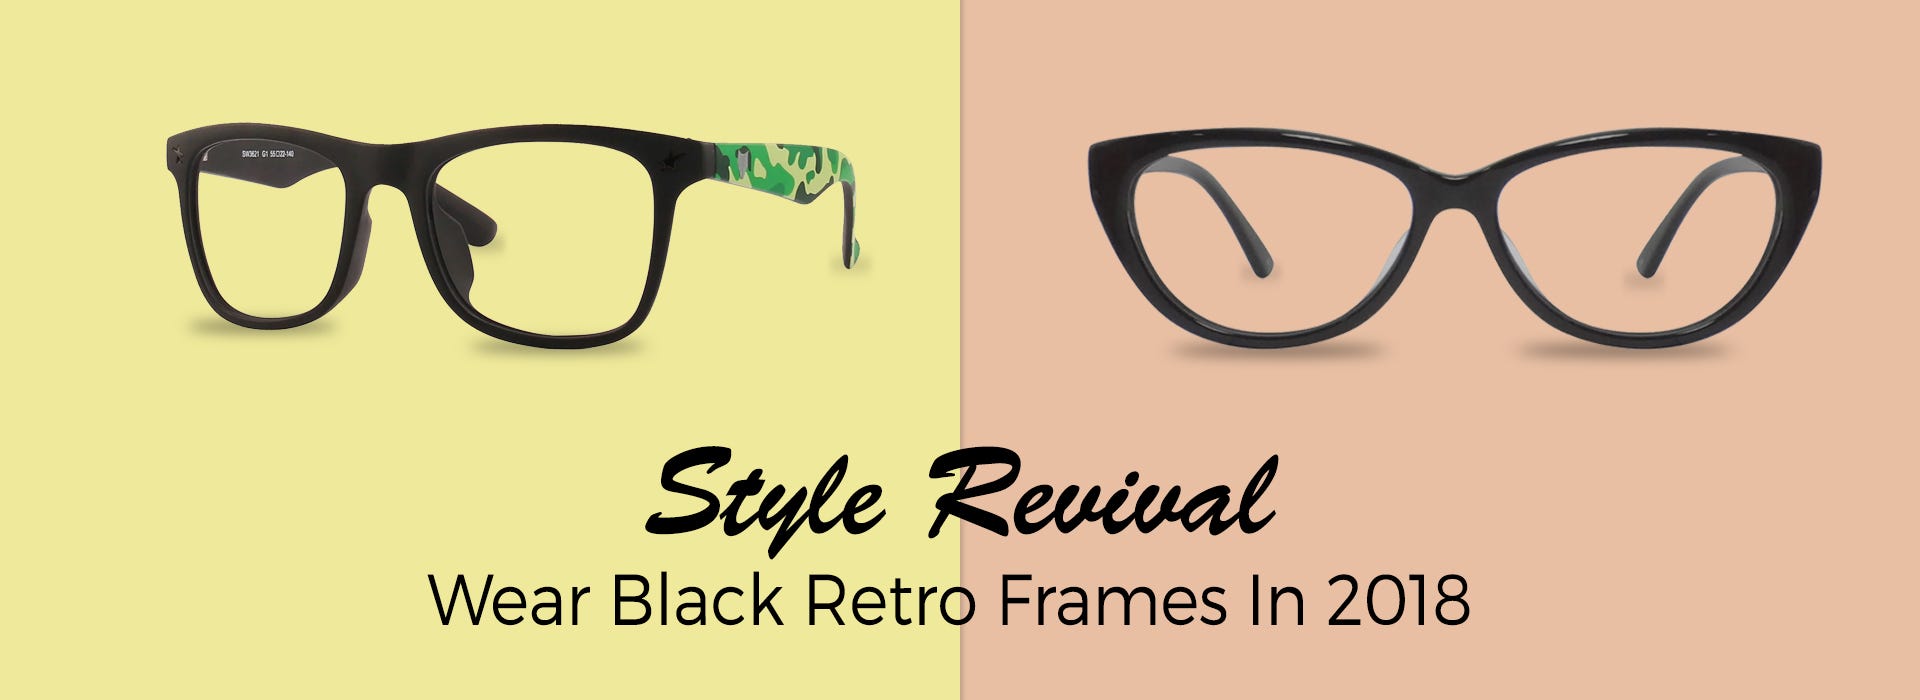 Style Revival: Wear Black Retro Frames In 2018